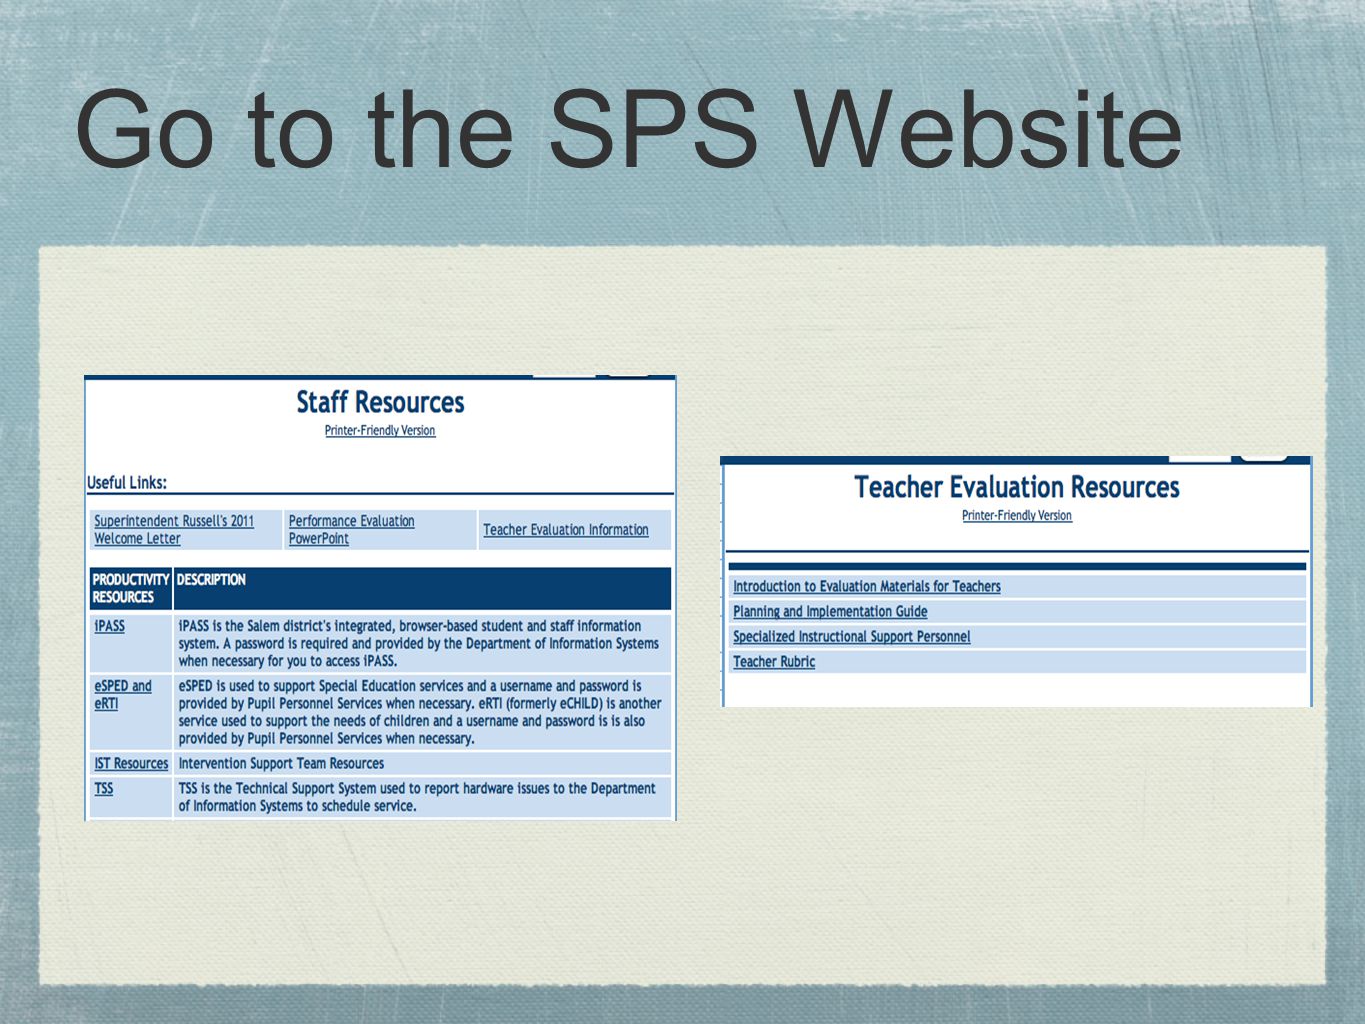 Go to the SPS Website